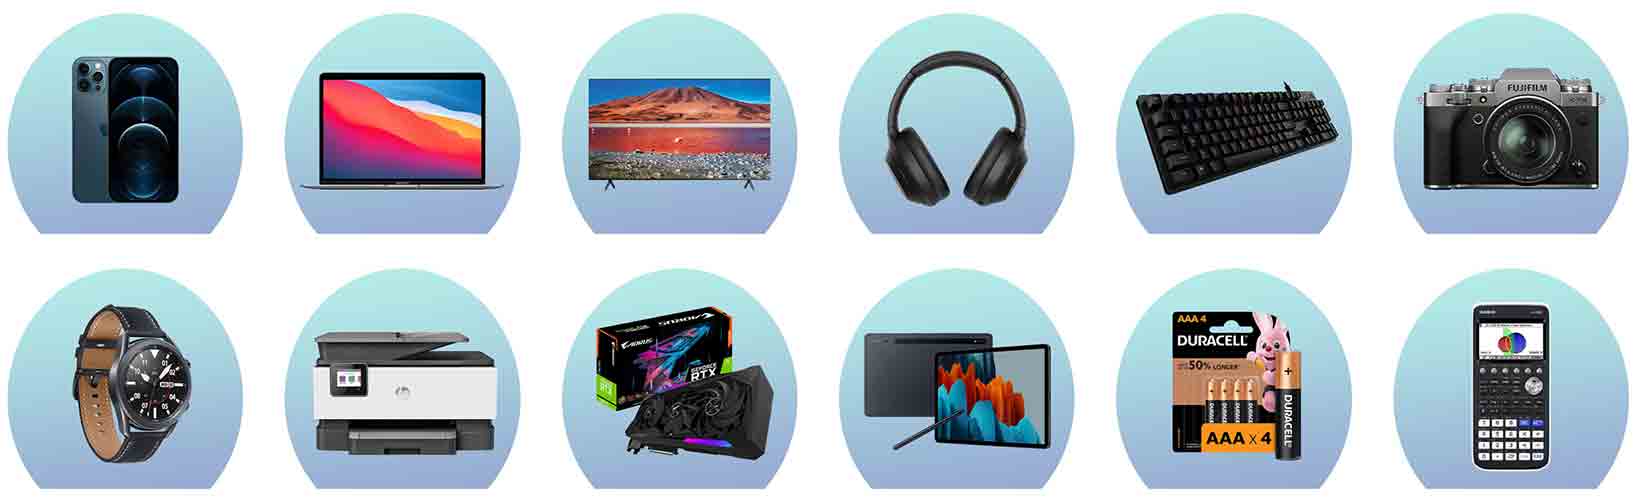 Amazon Electronics Offers